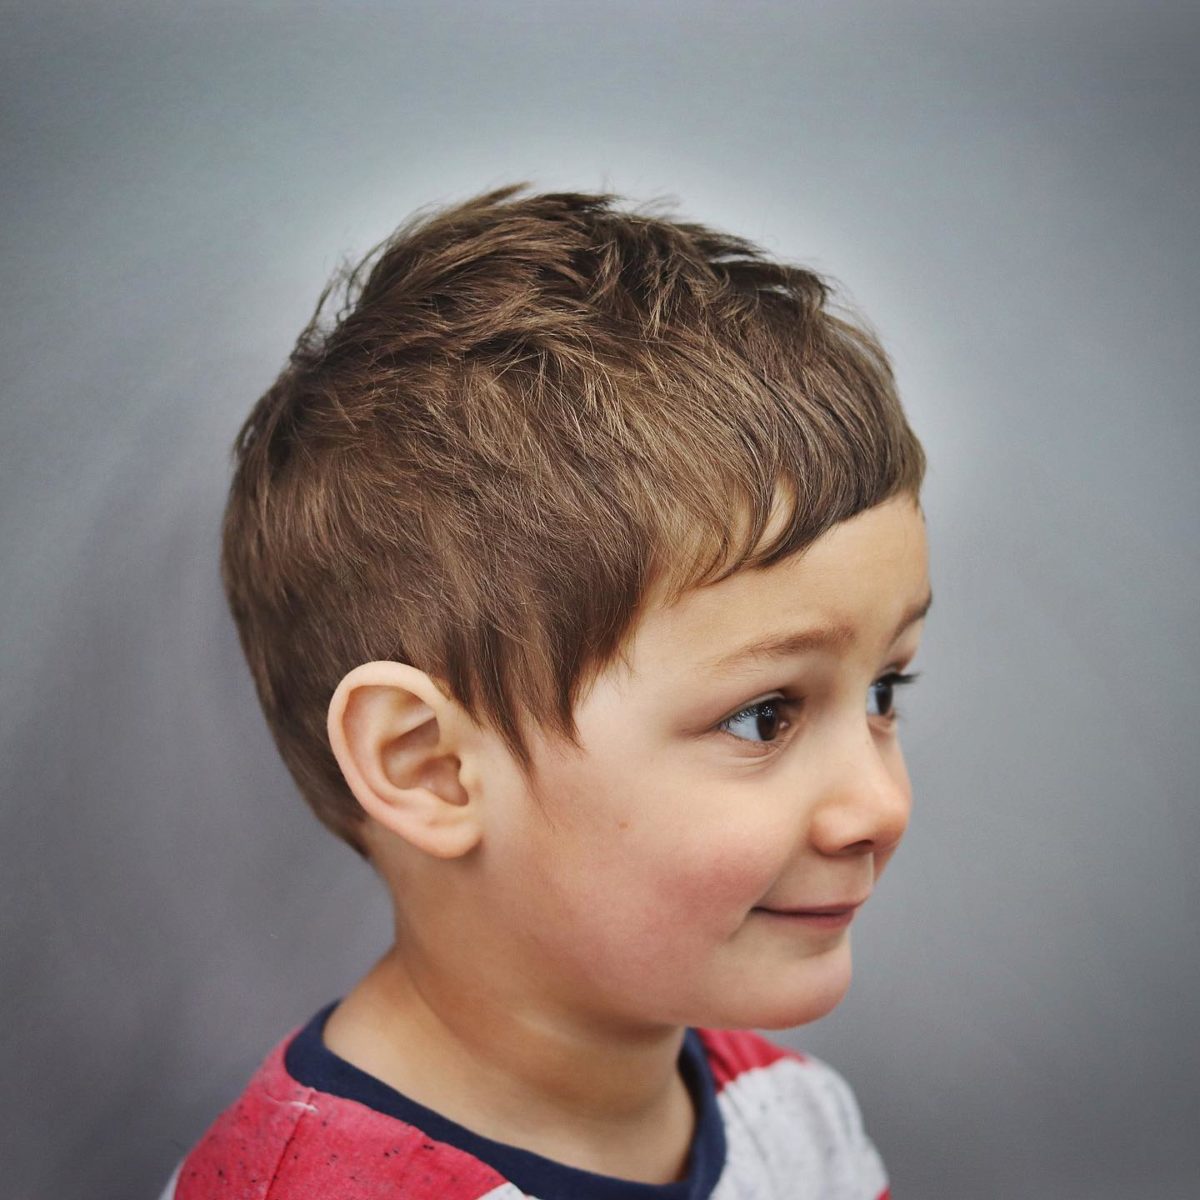 20 Toddler Boy Haircut Ideas